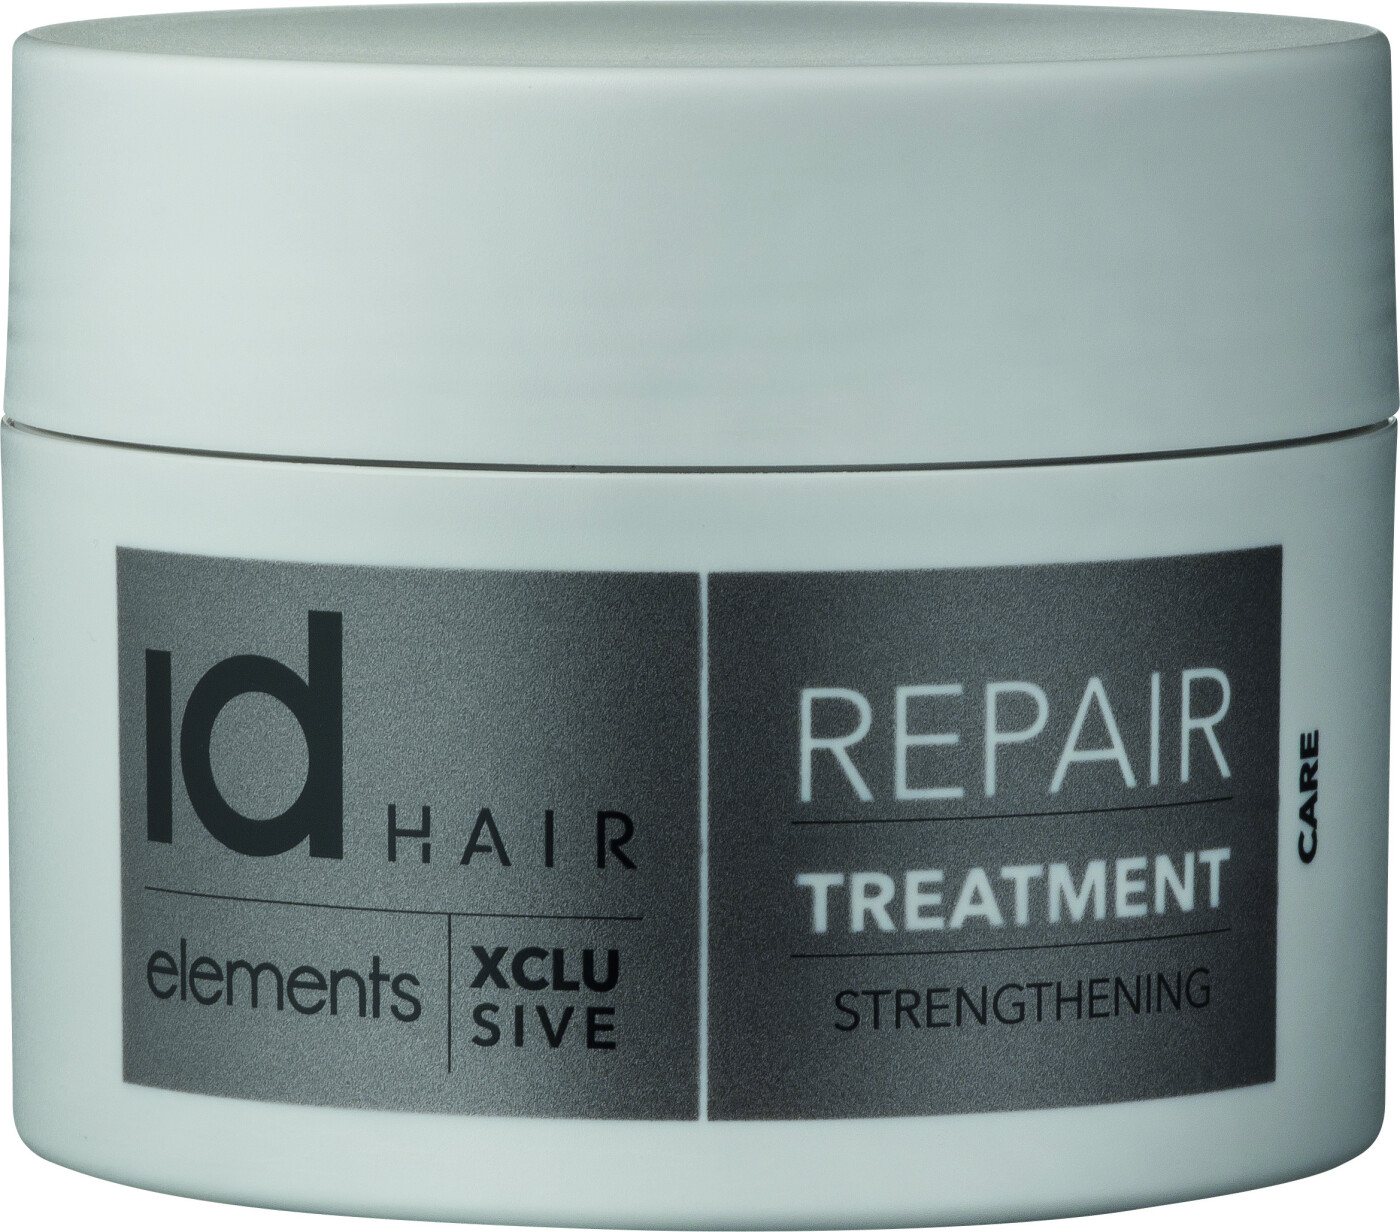 Billede af Id Hair - Elements Xclusive Repair Treatment 200 Ml hos Gucca.dk